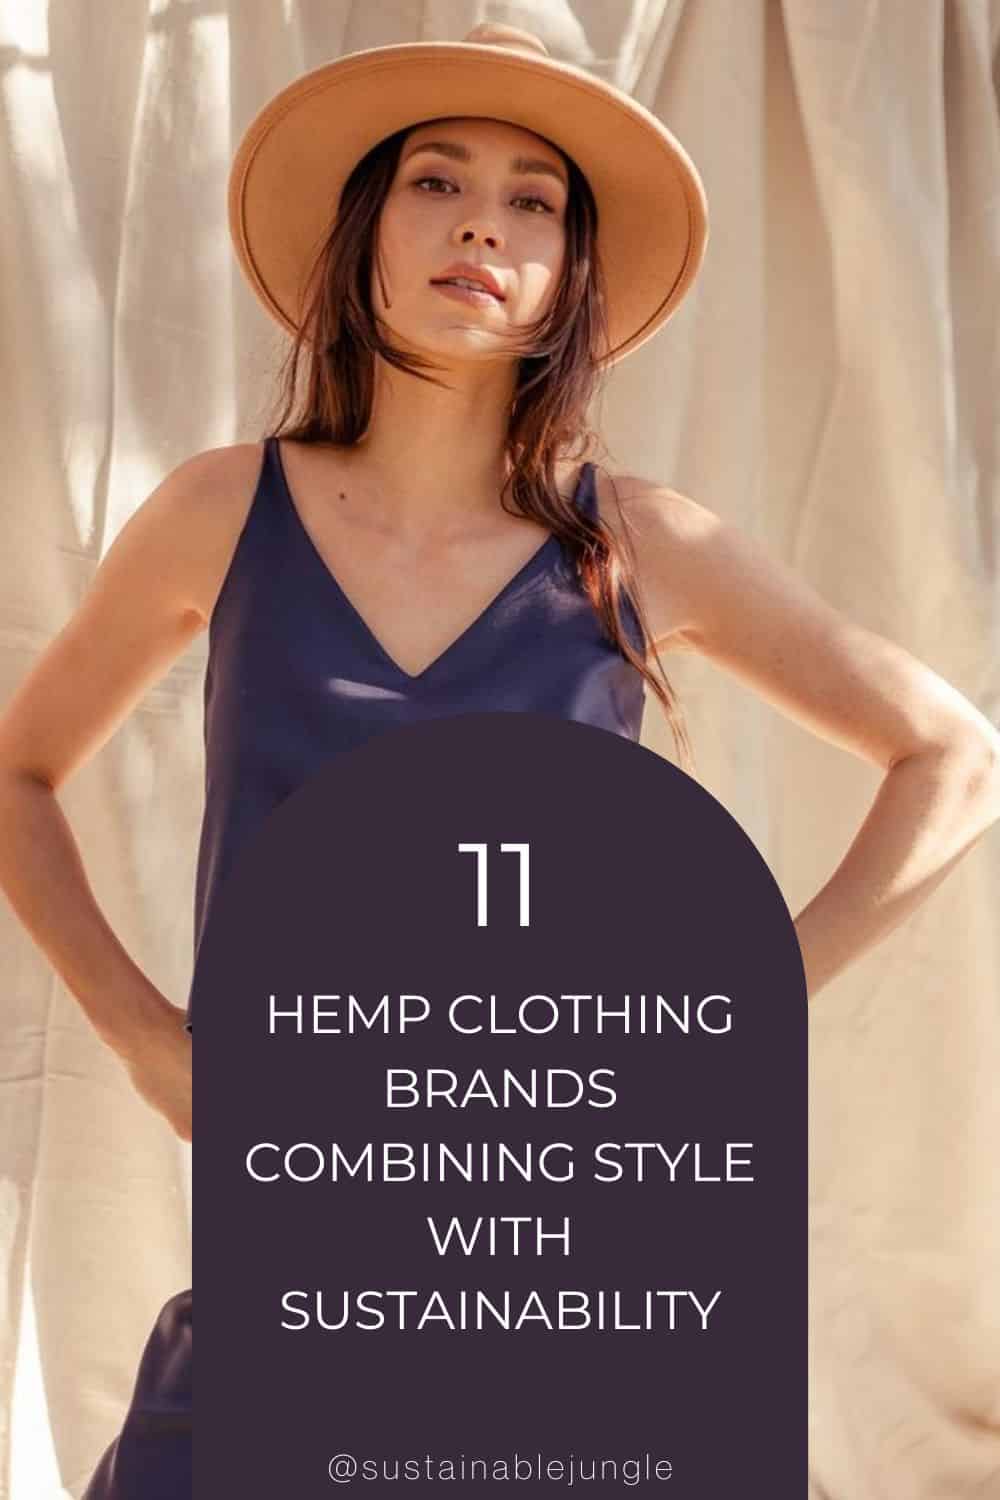 11 Hemp Clothing Brands Combining Style With Sustainability Image by VALANI #hempclothingbrands #organichempclothingbrands #clothingmadefromhemp #sustainablehempclothing #womenshempclothes #sustainablejungle